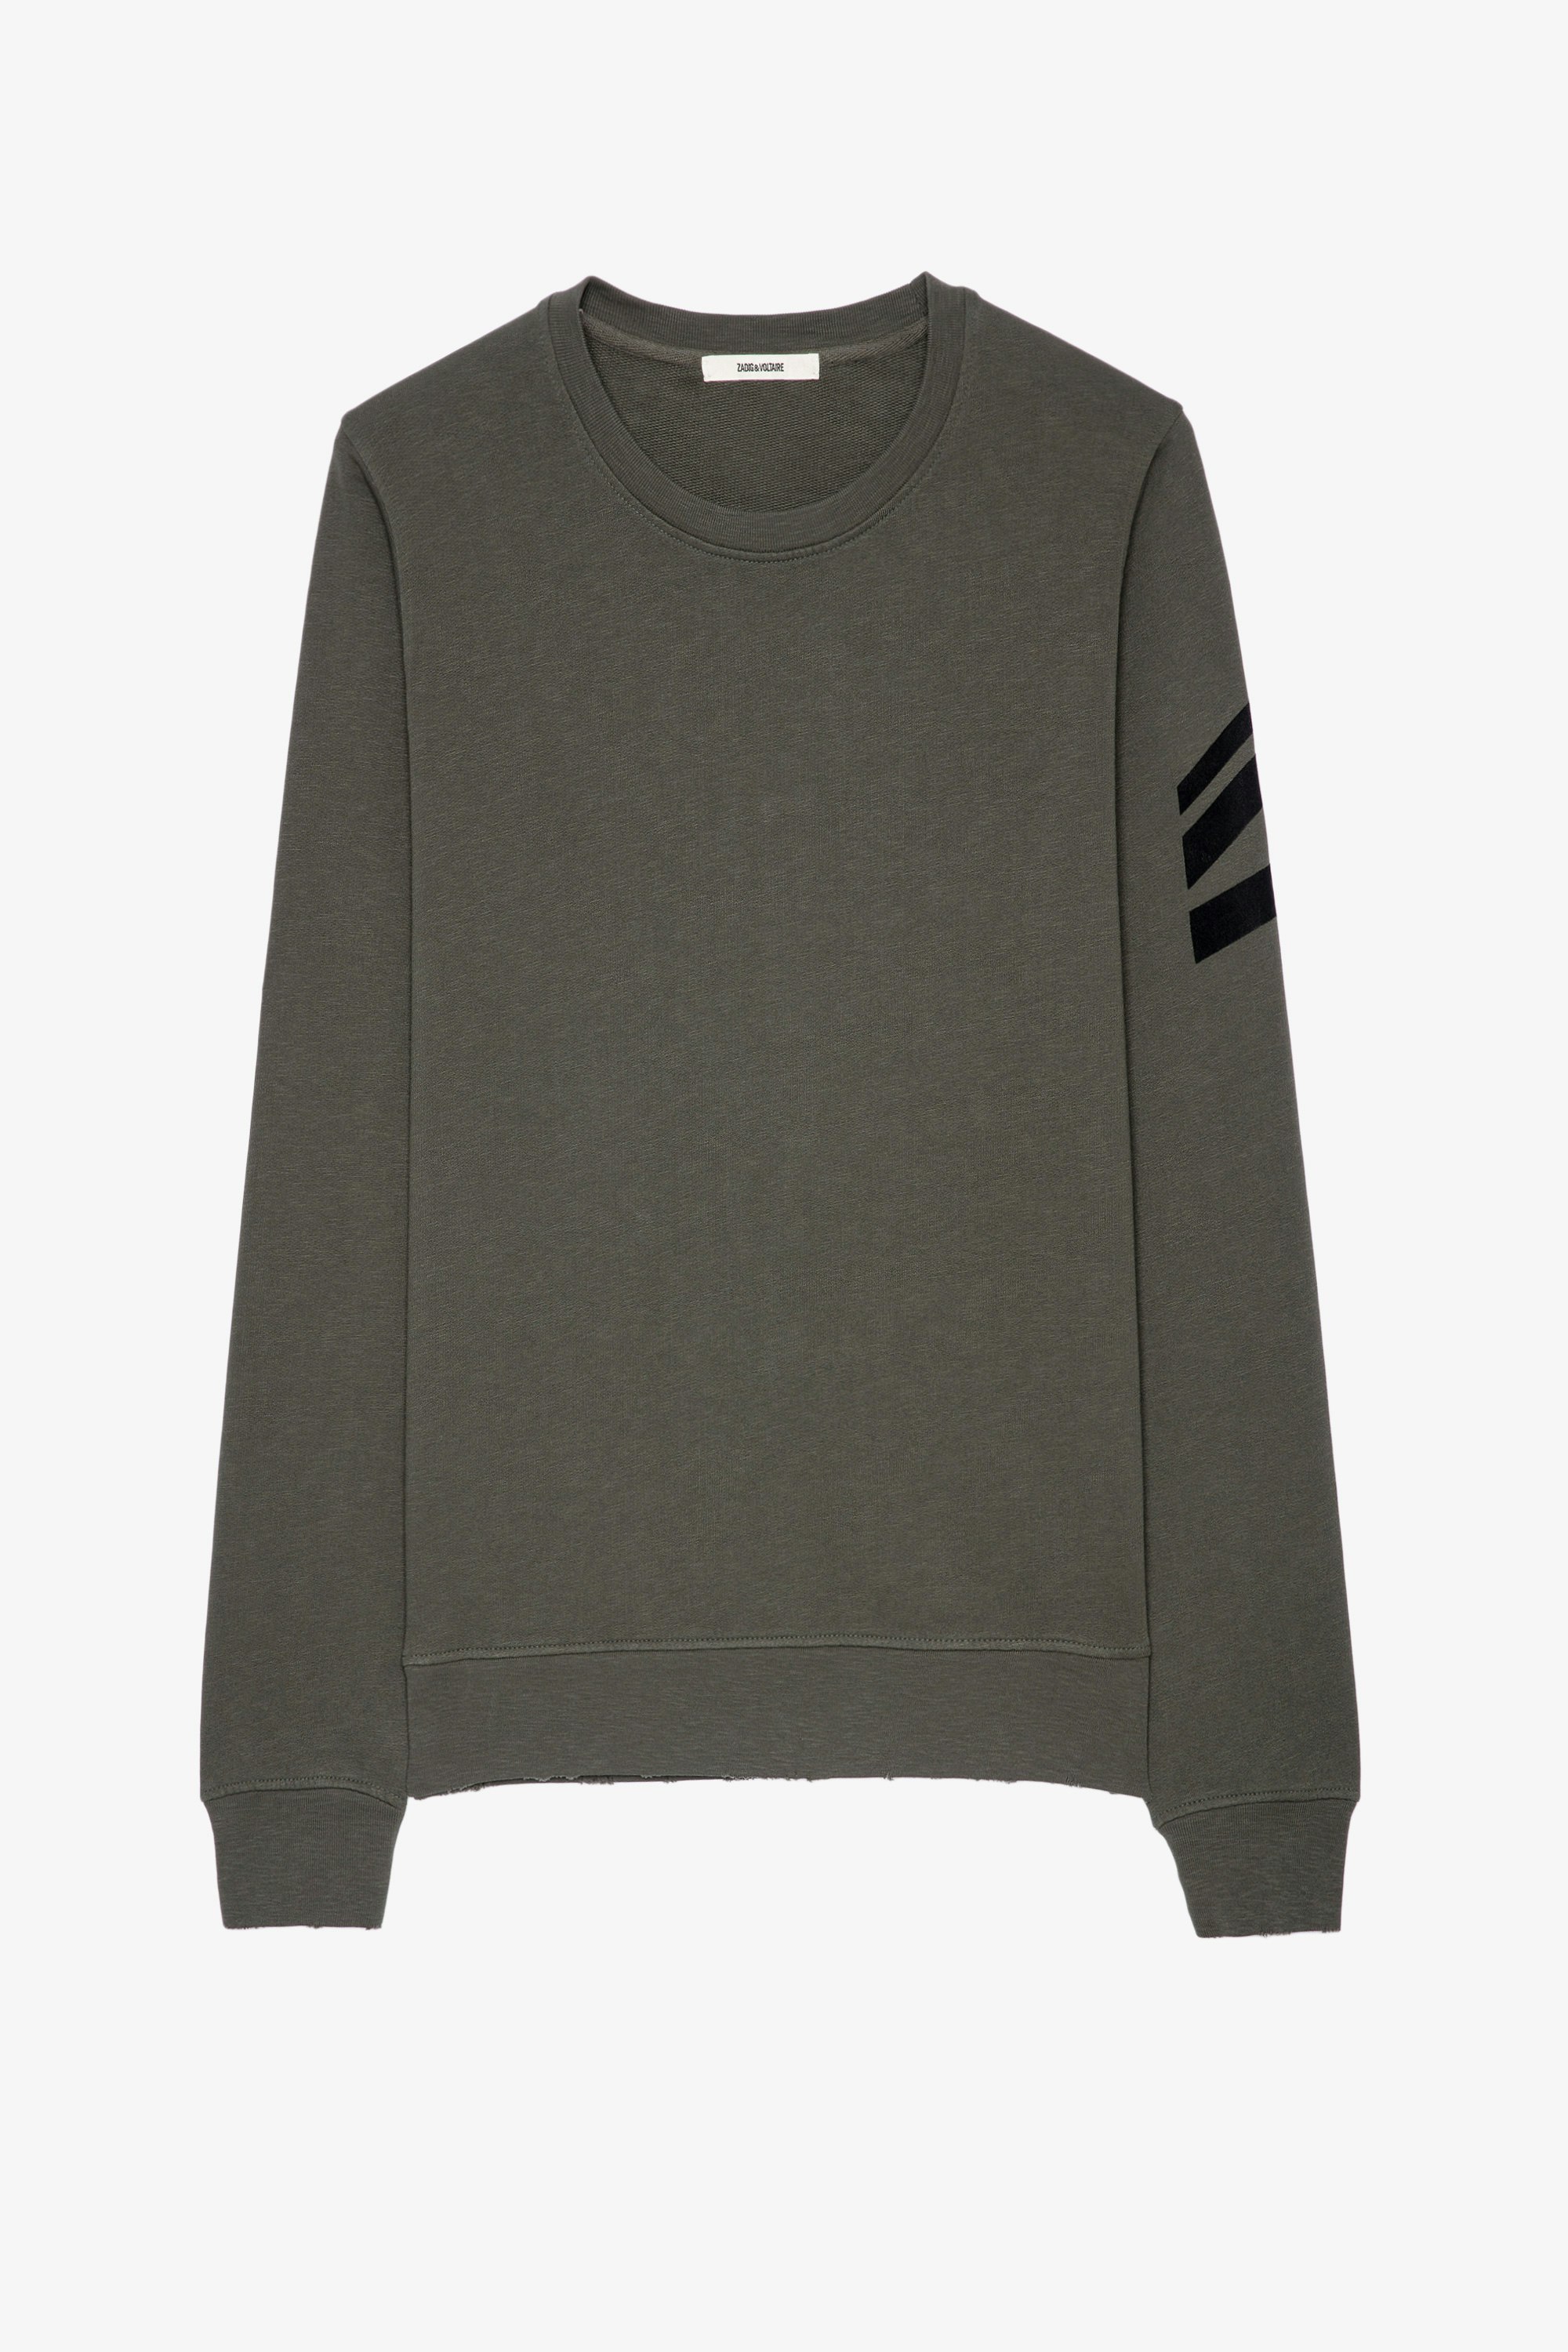 Soft Arrow Sweatshirt Men’s khaki cotton jumper